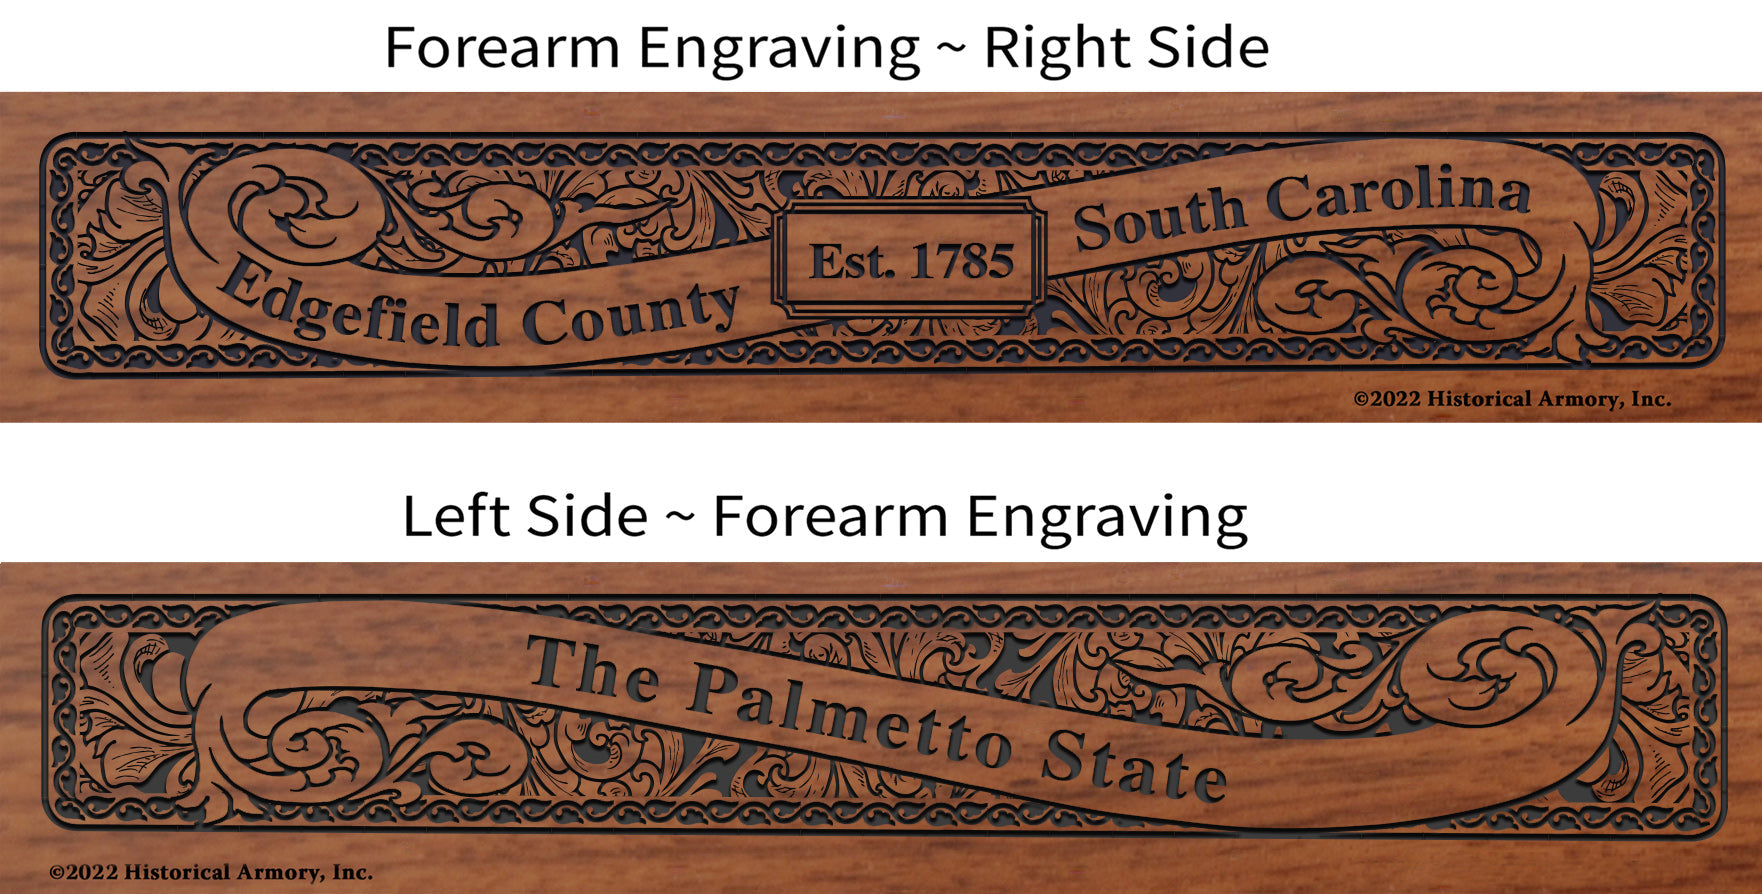 Edgefield County South Carolina Engraved Rifle Forearm